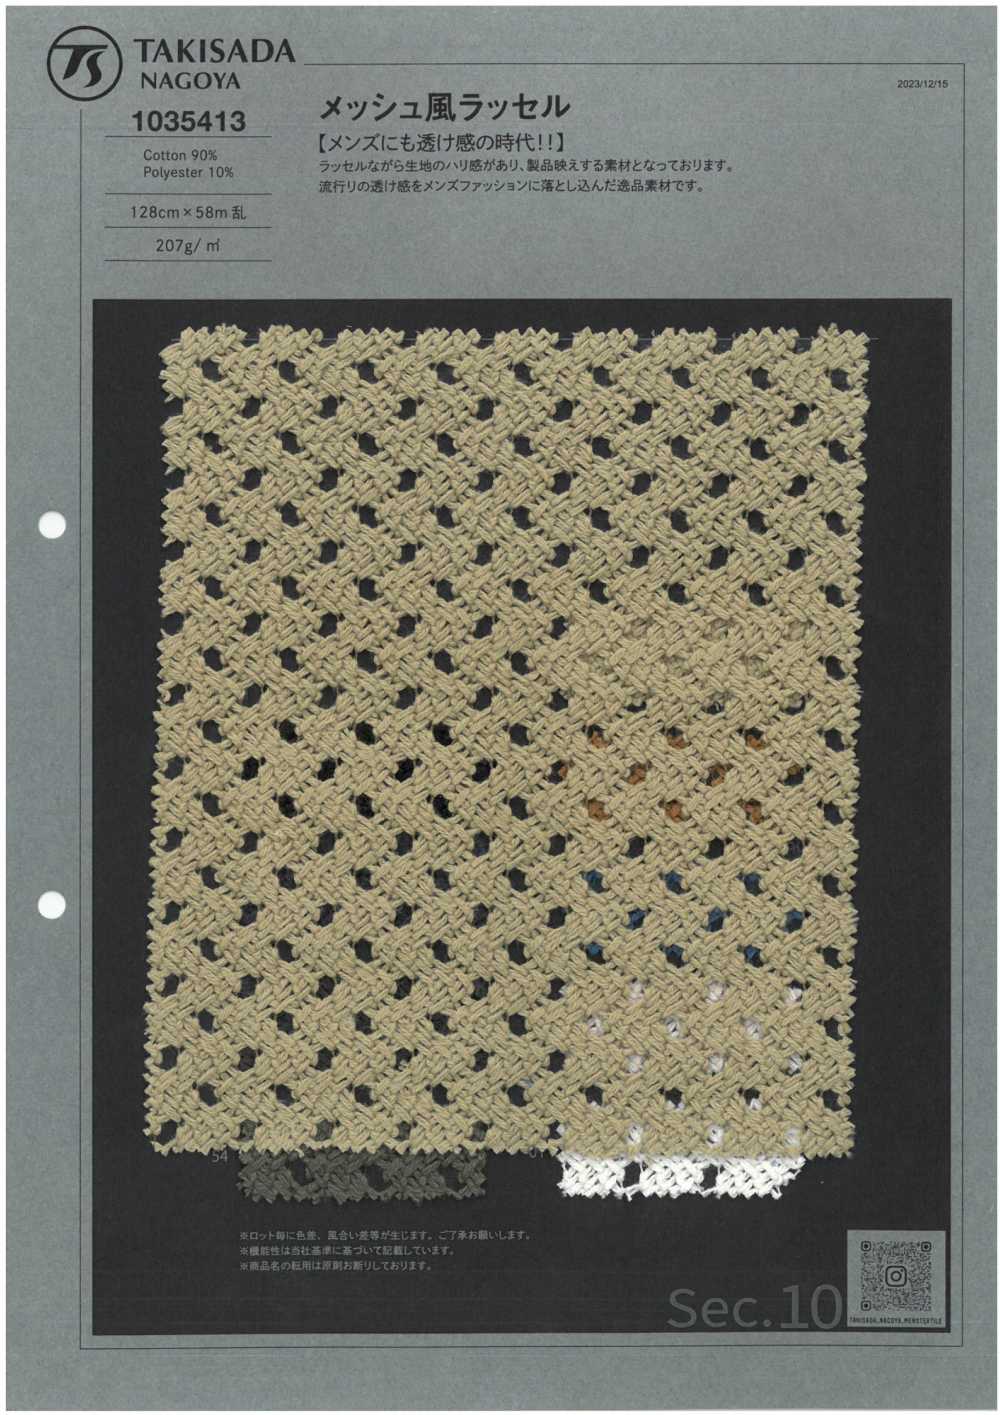 1035413 Kiểu Vải Lưới Dệt Kim đan Dọc Takisada Nagoya